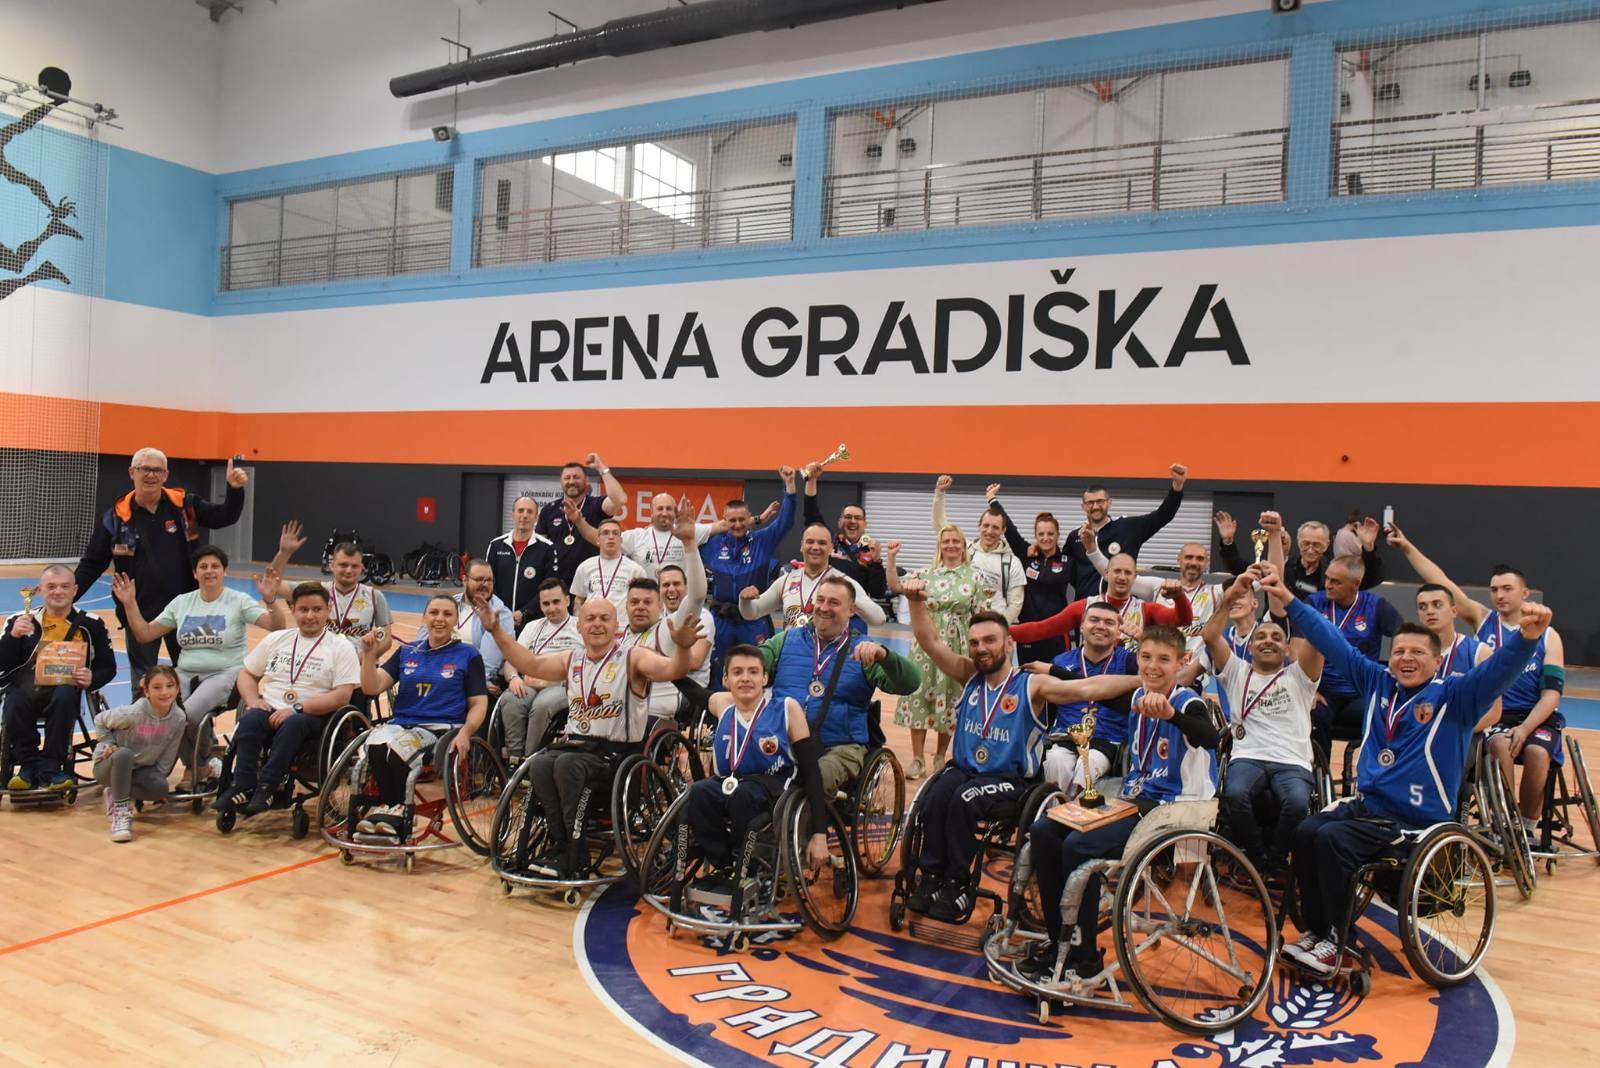  Kup RS košarka u kolicima: Finale 14. maja, trofej brani Vrbas 